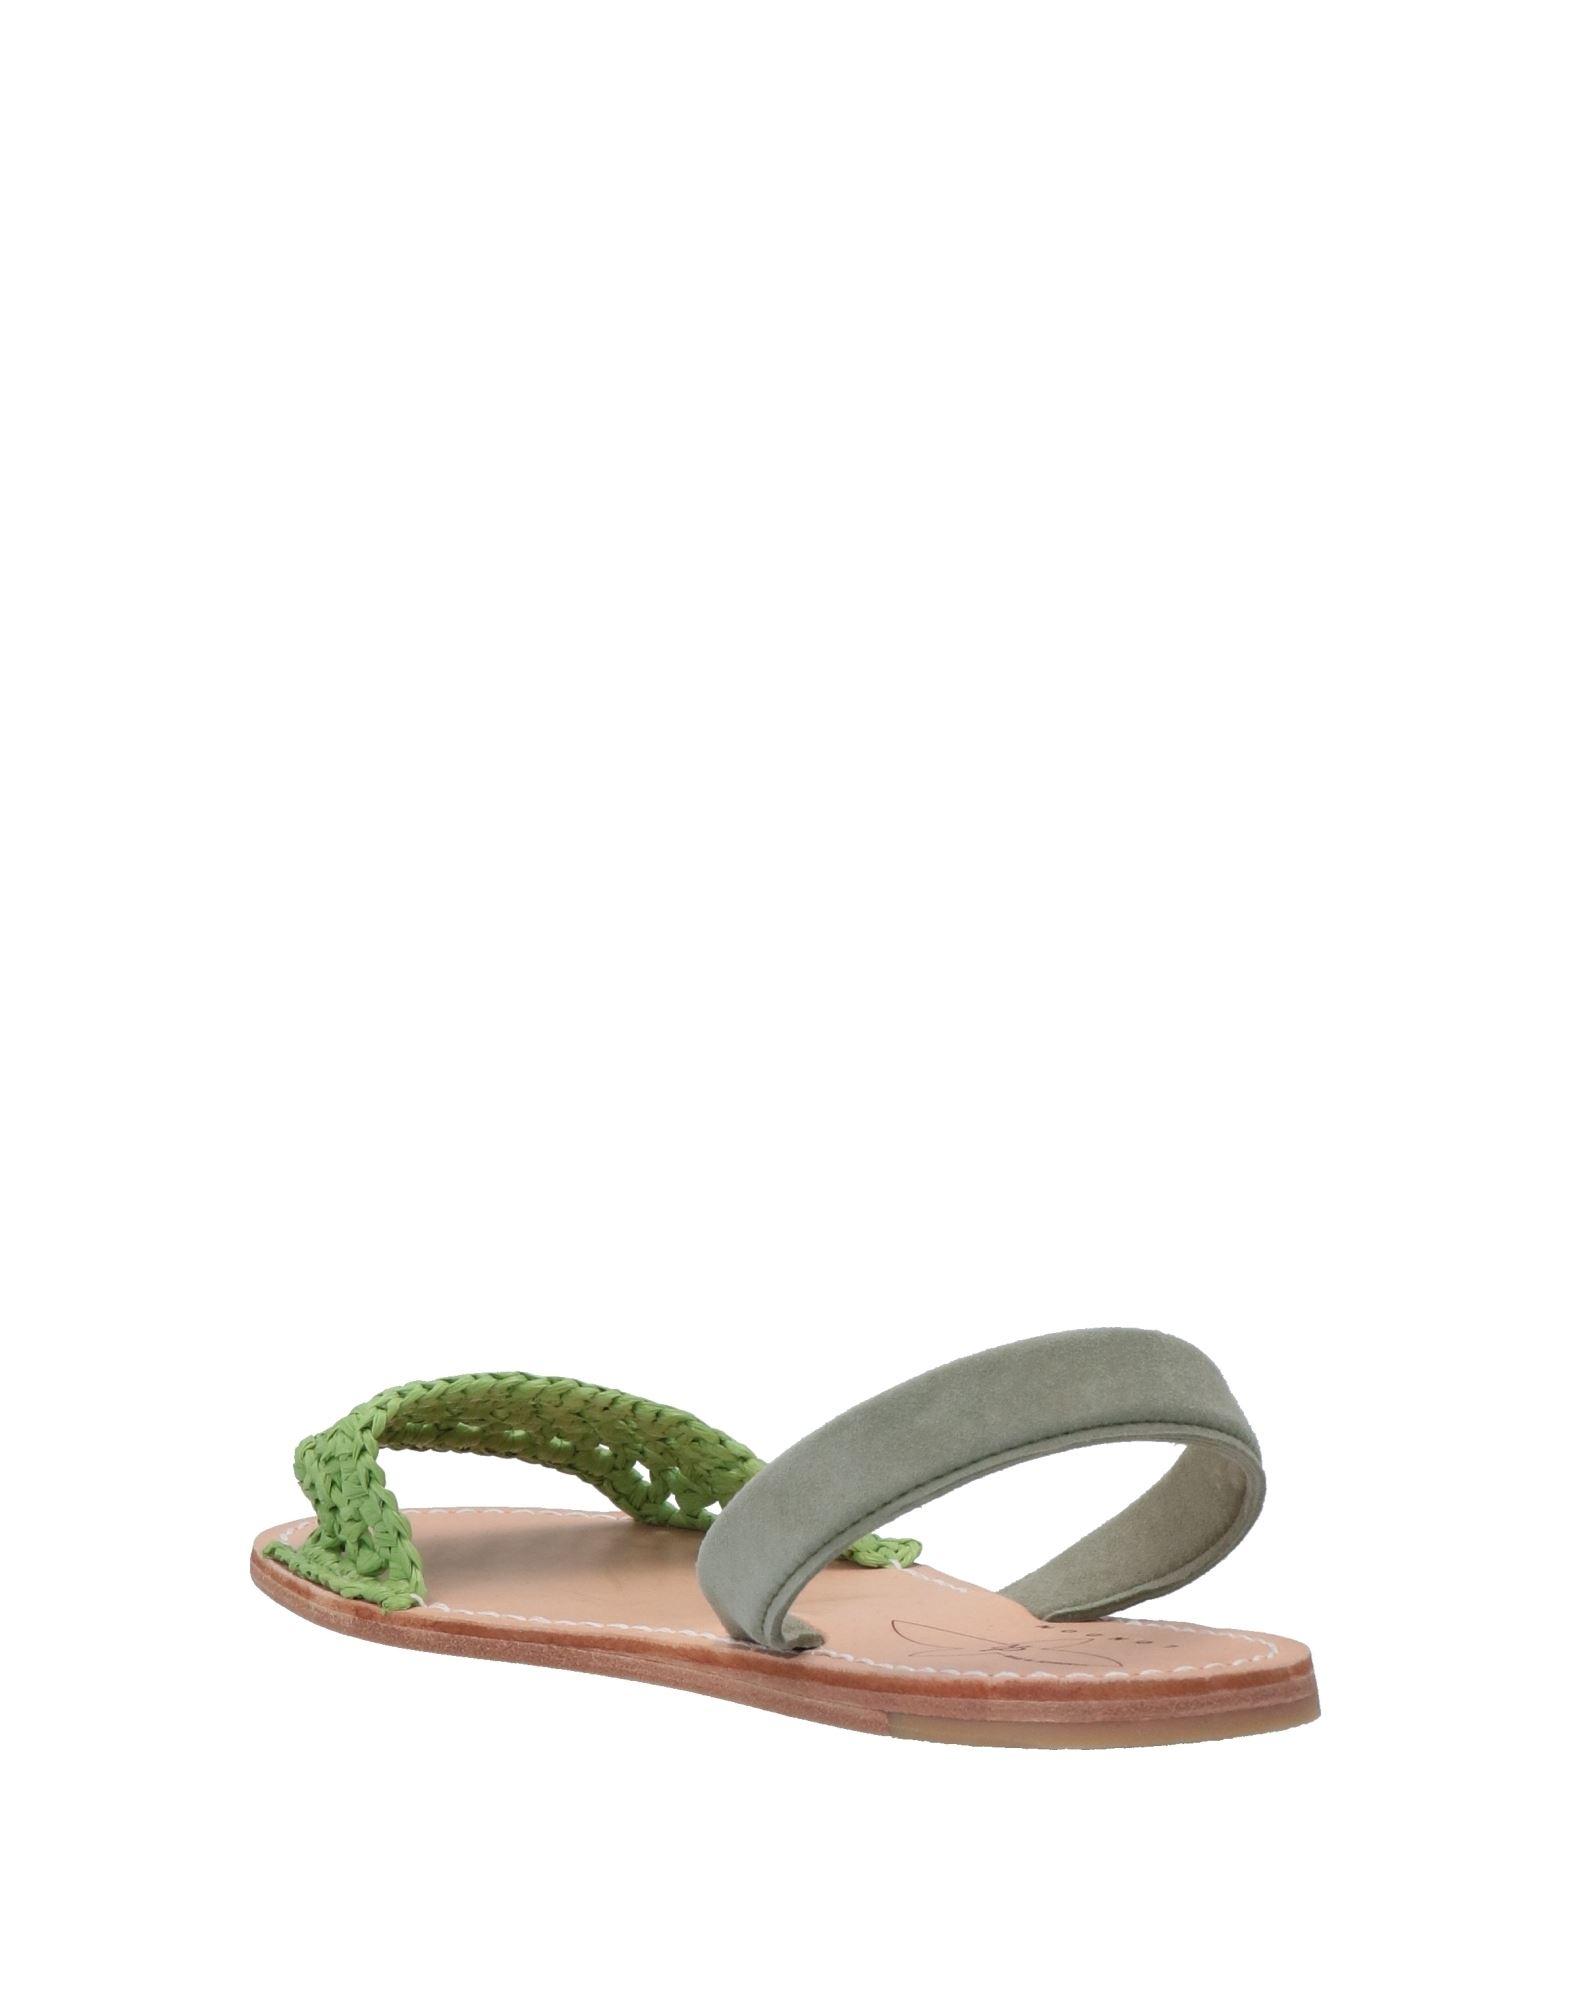 Del Rio London Sandals in Green | Lyst